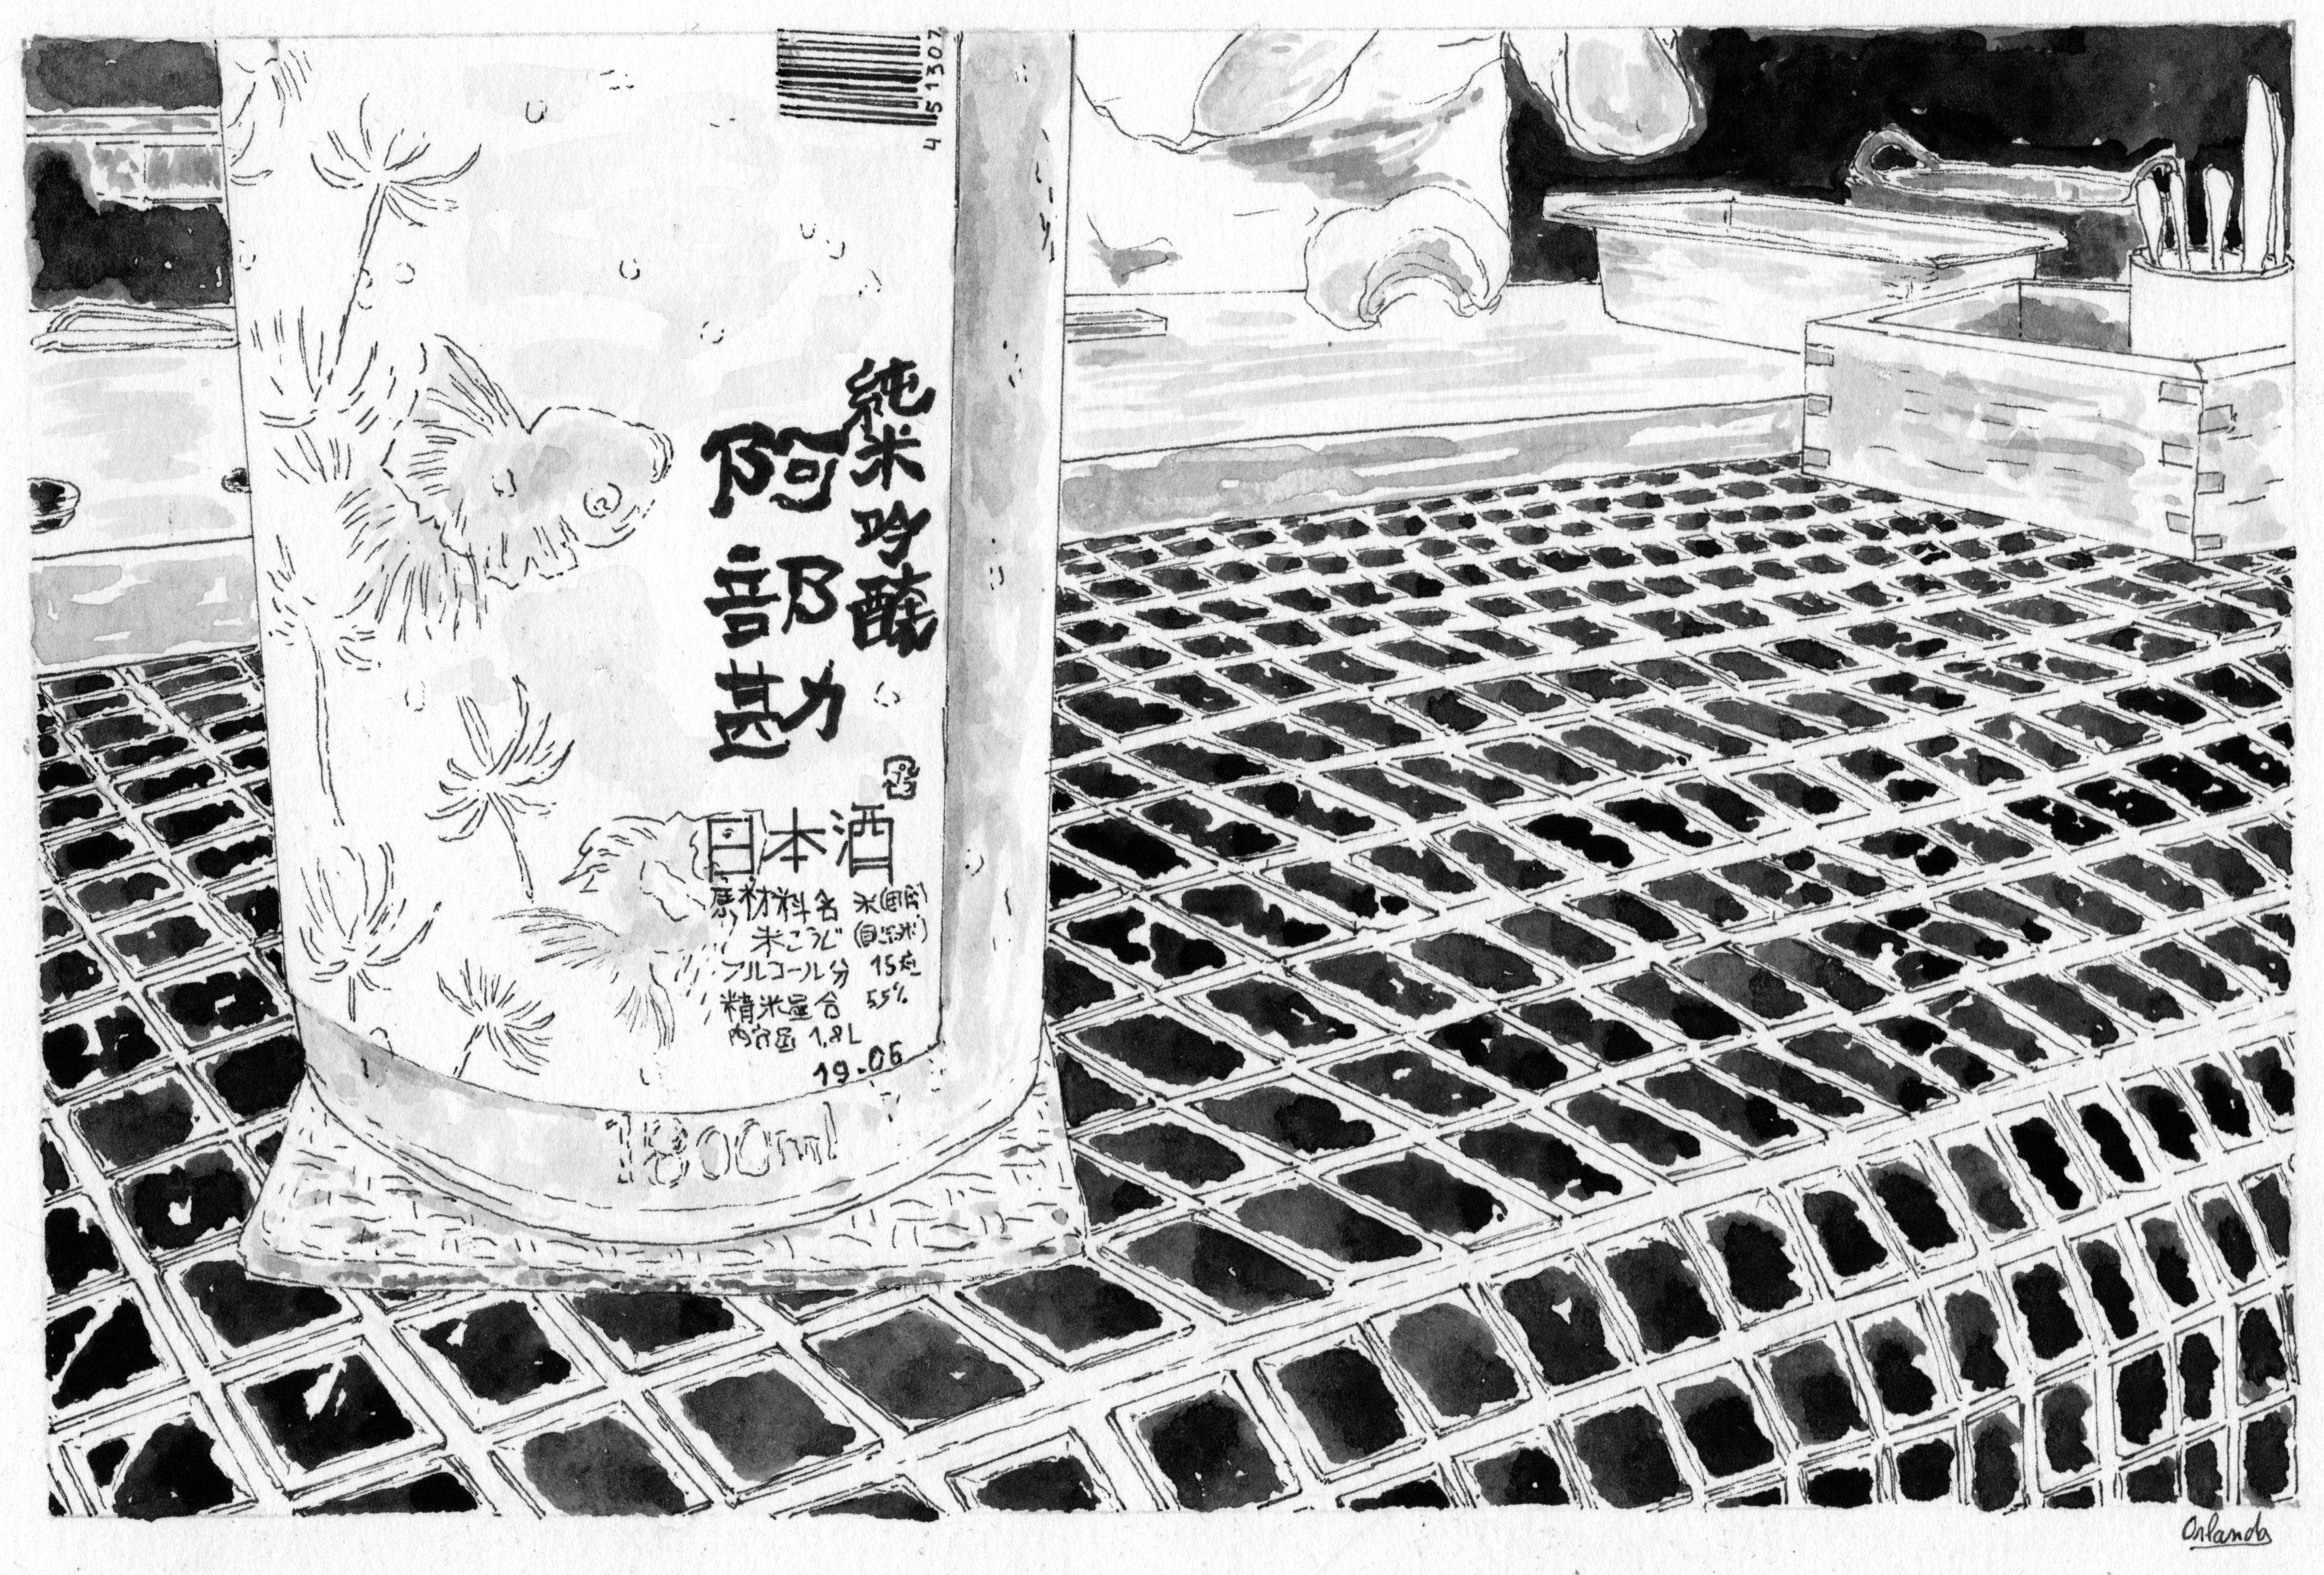 sake bottle in Kobe, Painting, Watercolor on Paper - Art by Orlando Marin